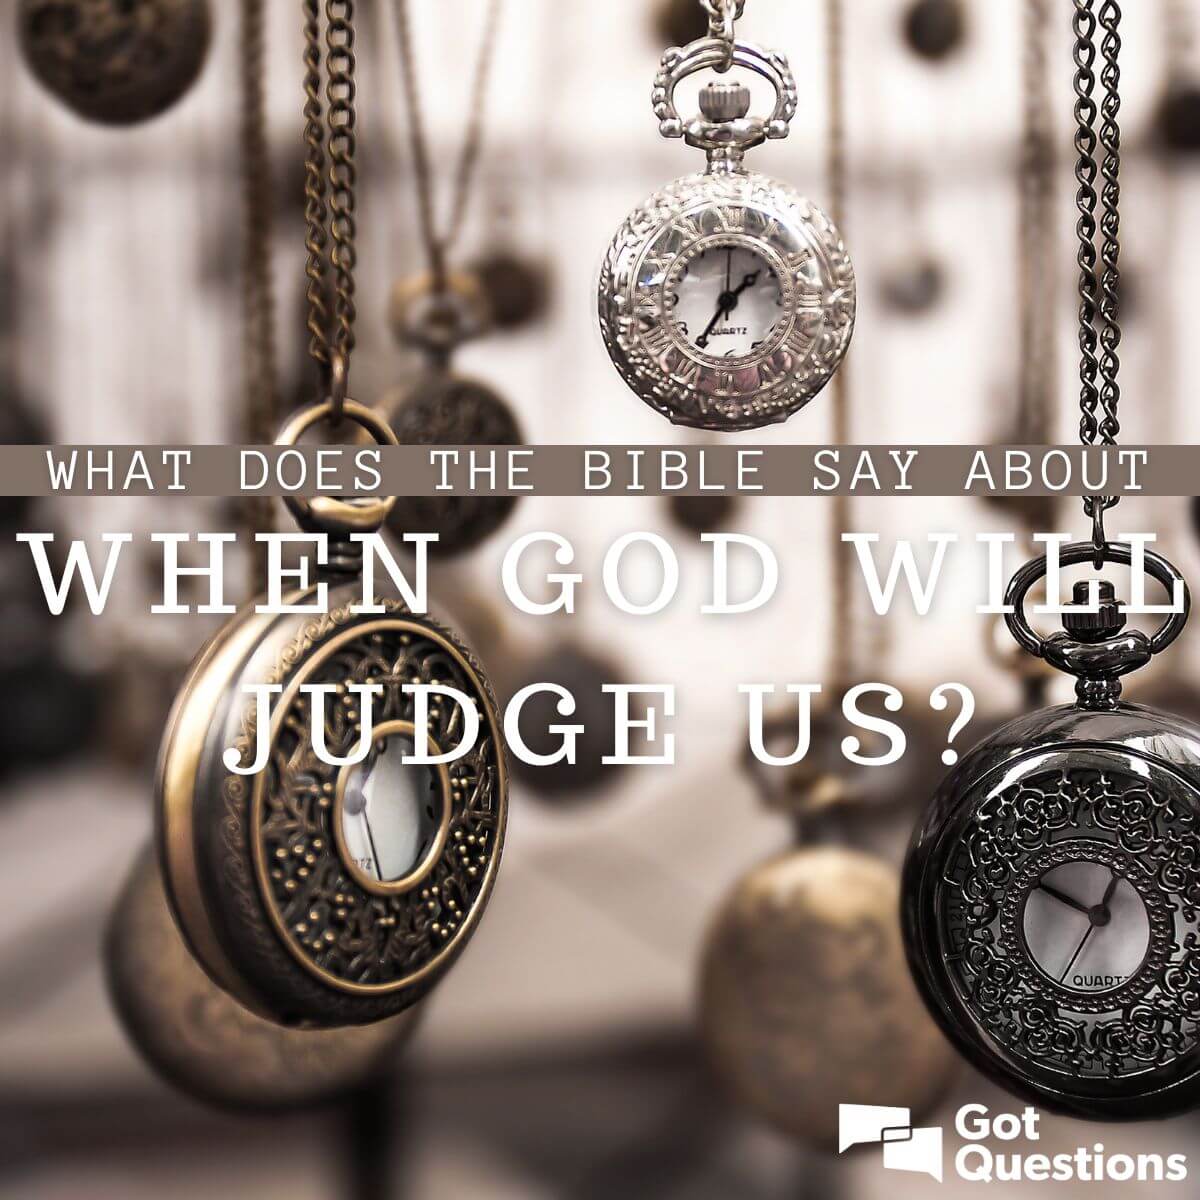 jesus will judge you